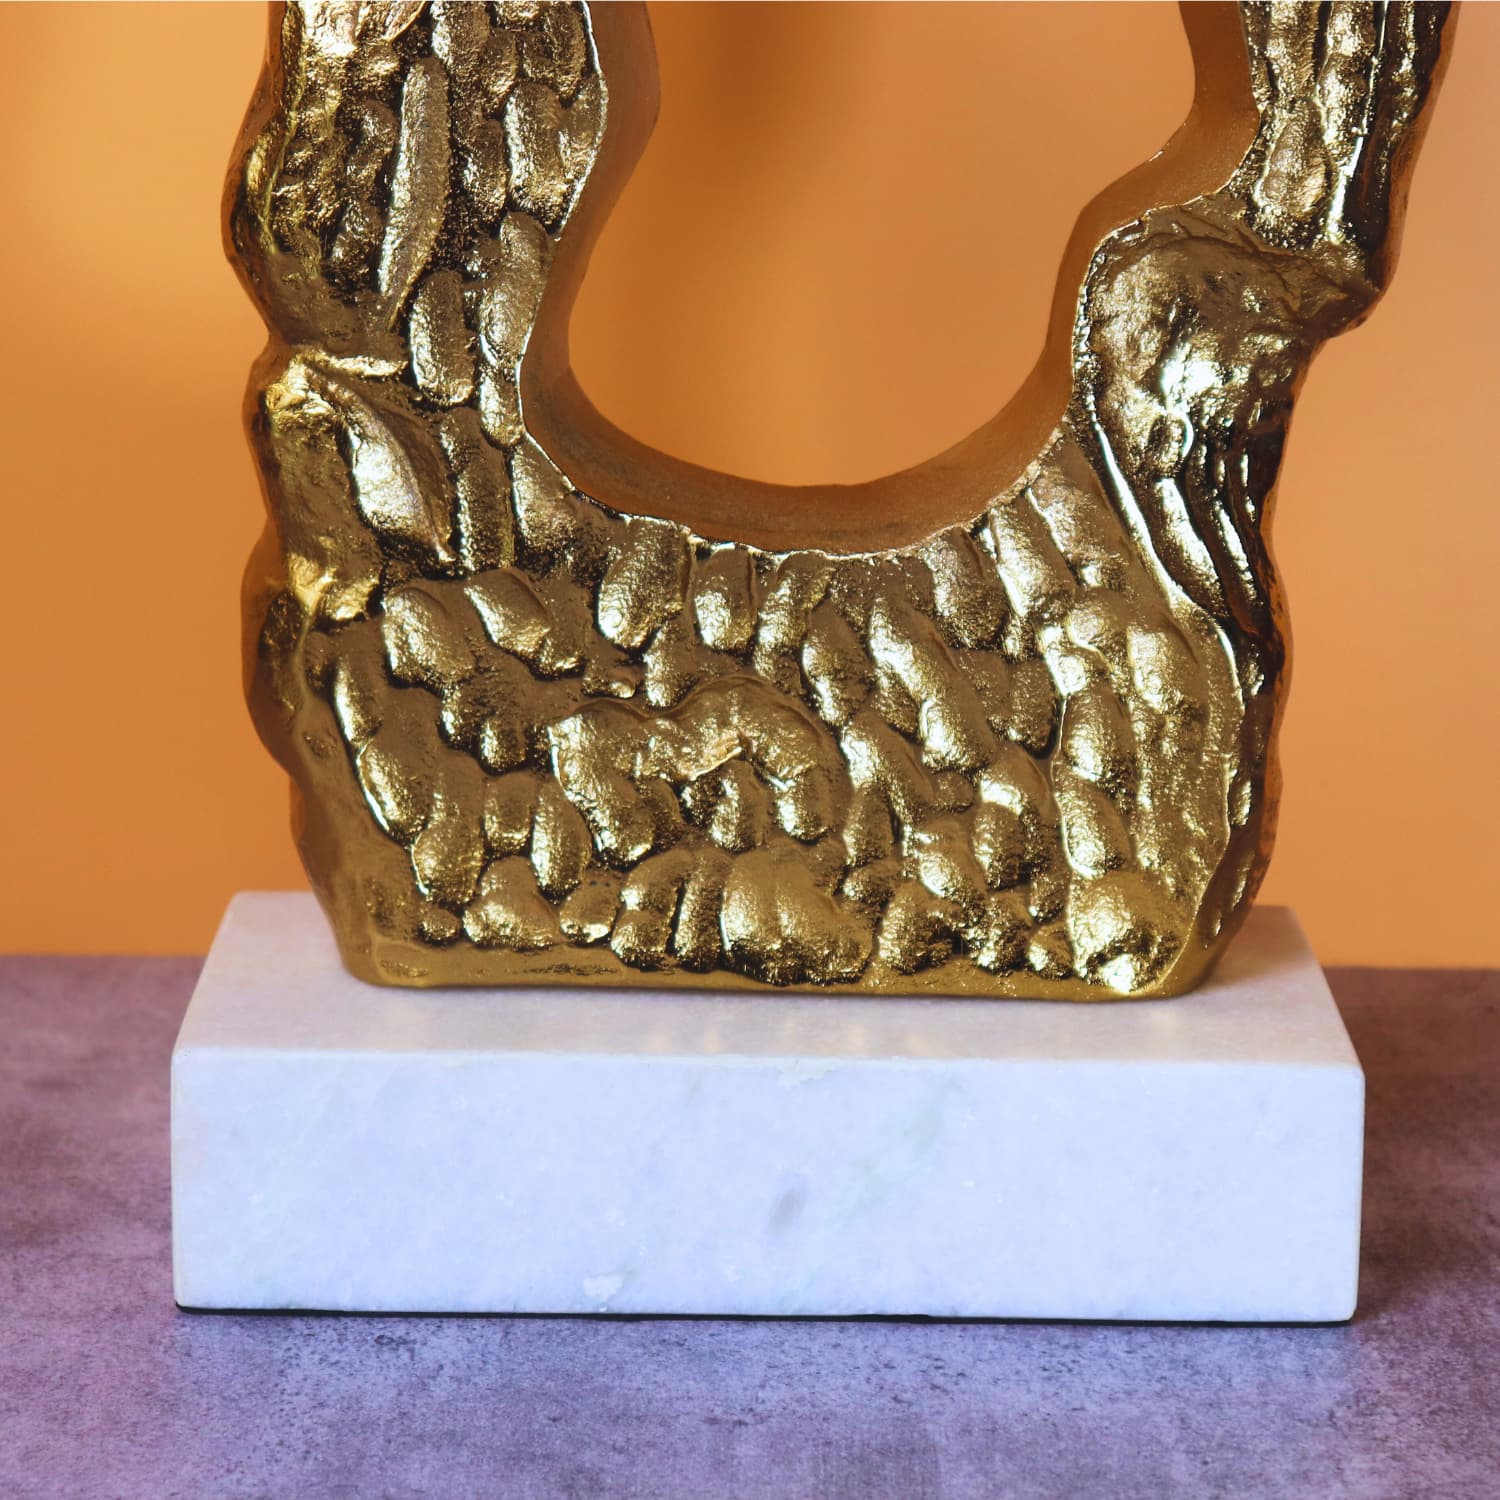 The Golden Rock Sculpture in Aluminum Metal  Raw Finish